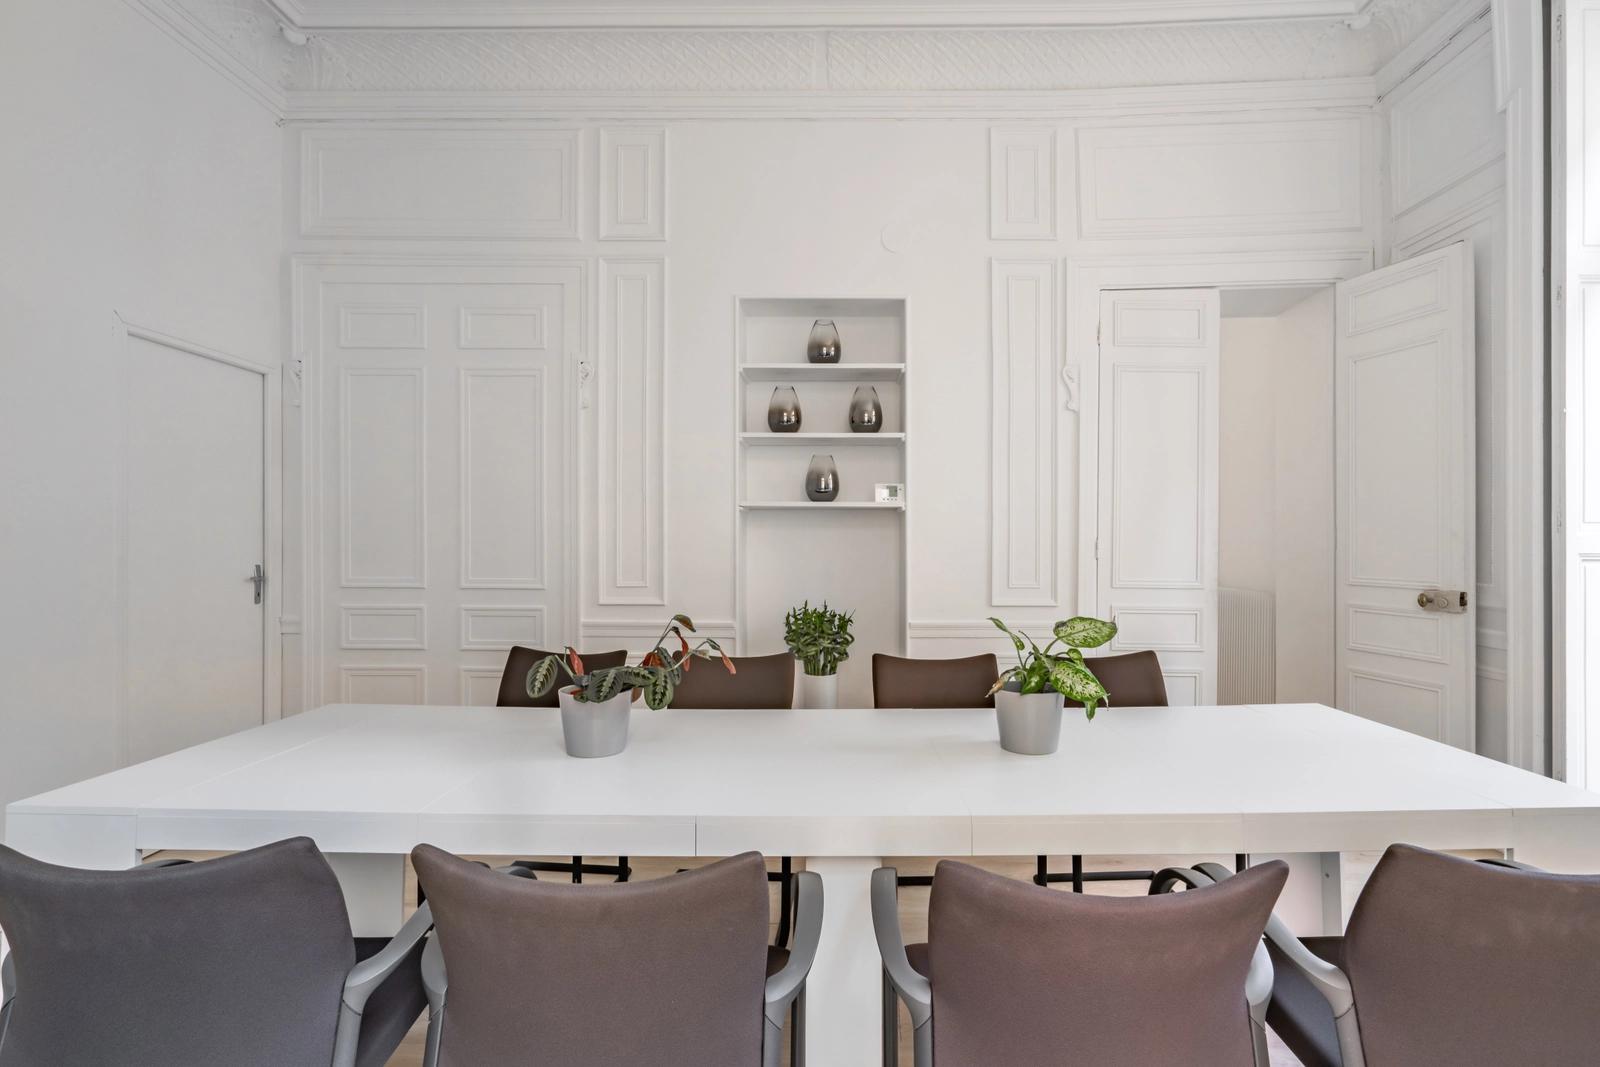 Meeting room in Haussmann-style meeting space - 2